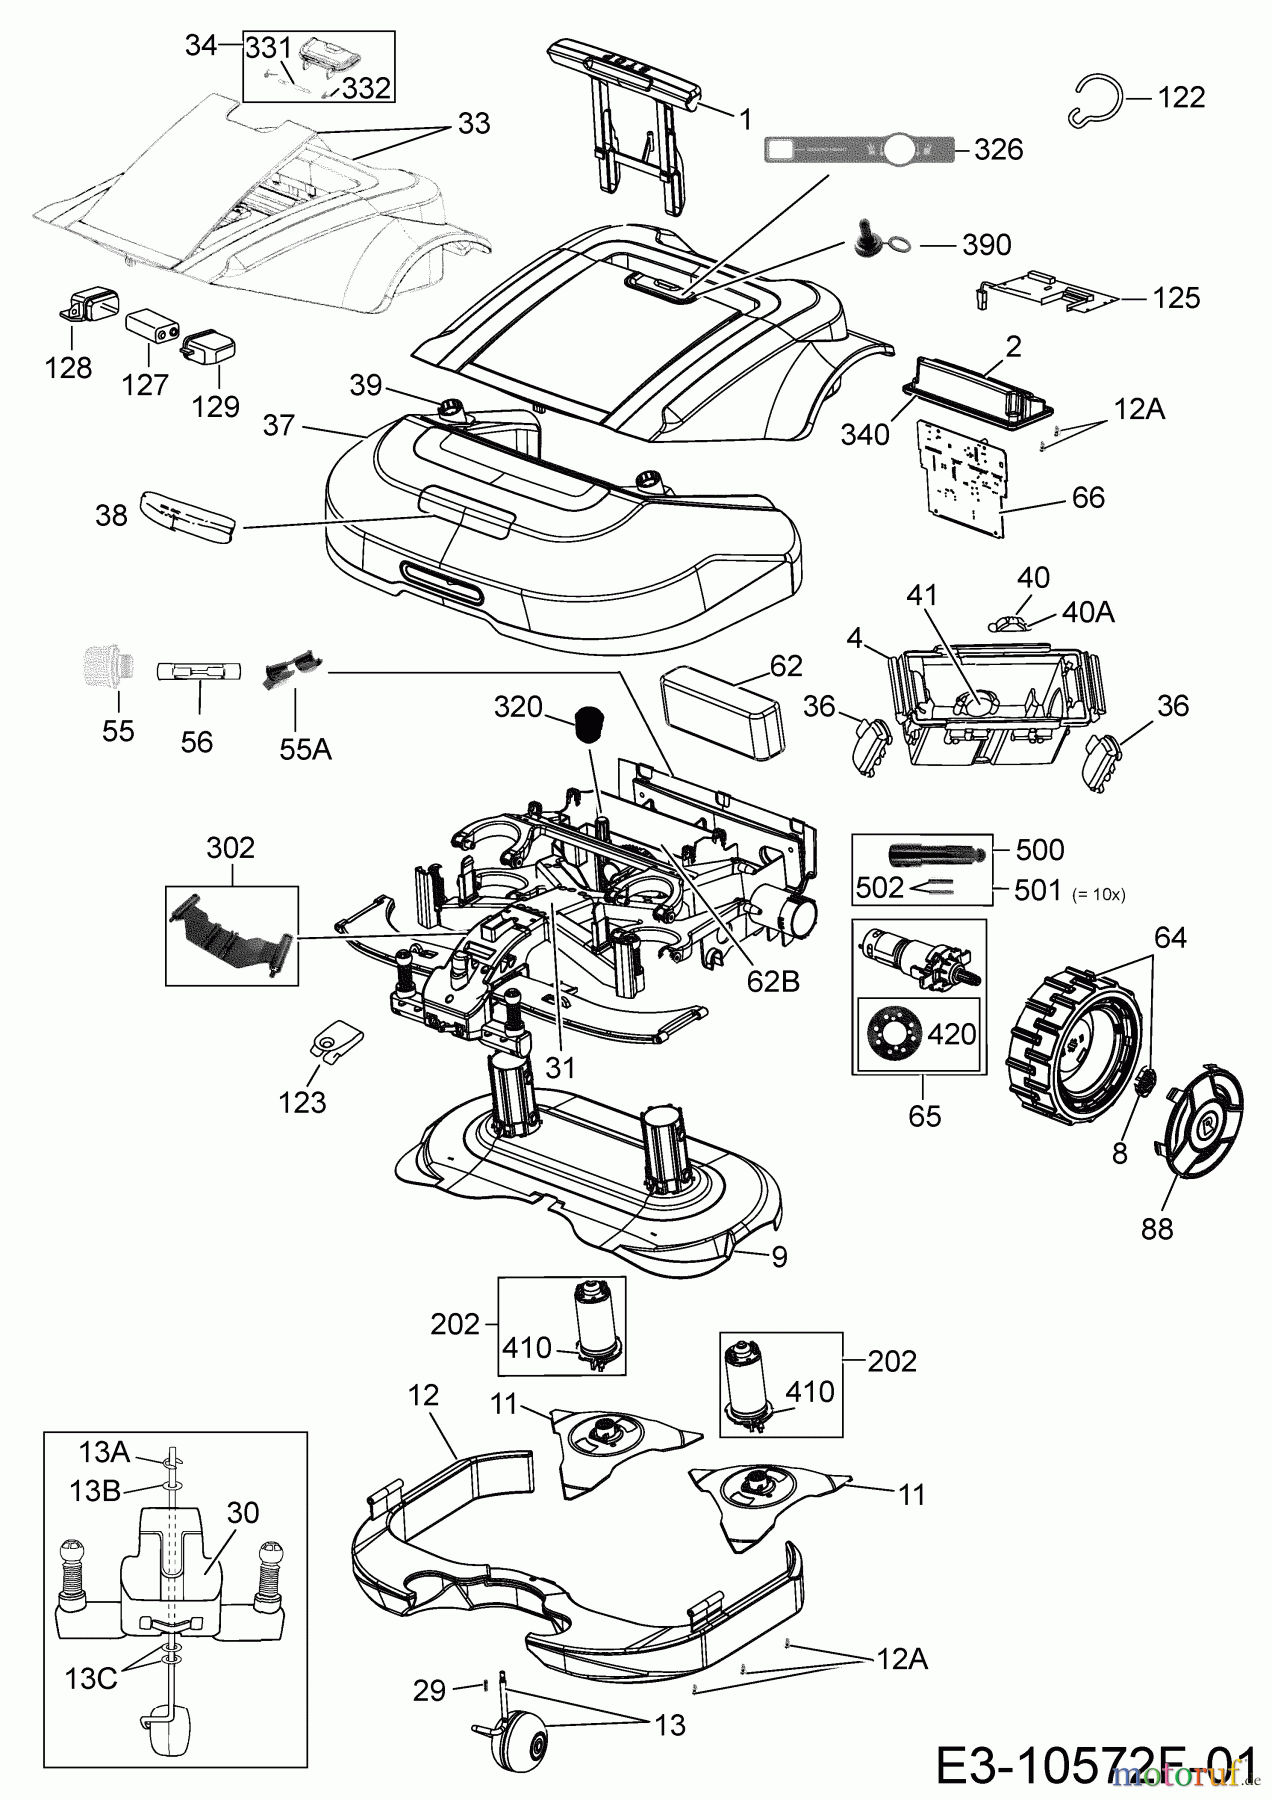  Robomow Robotic lawn mower RS625 PRO 22BSDAAD619 (2020) Basic machine